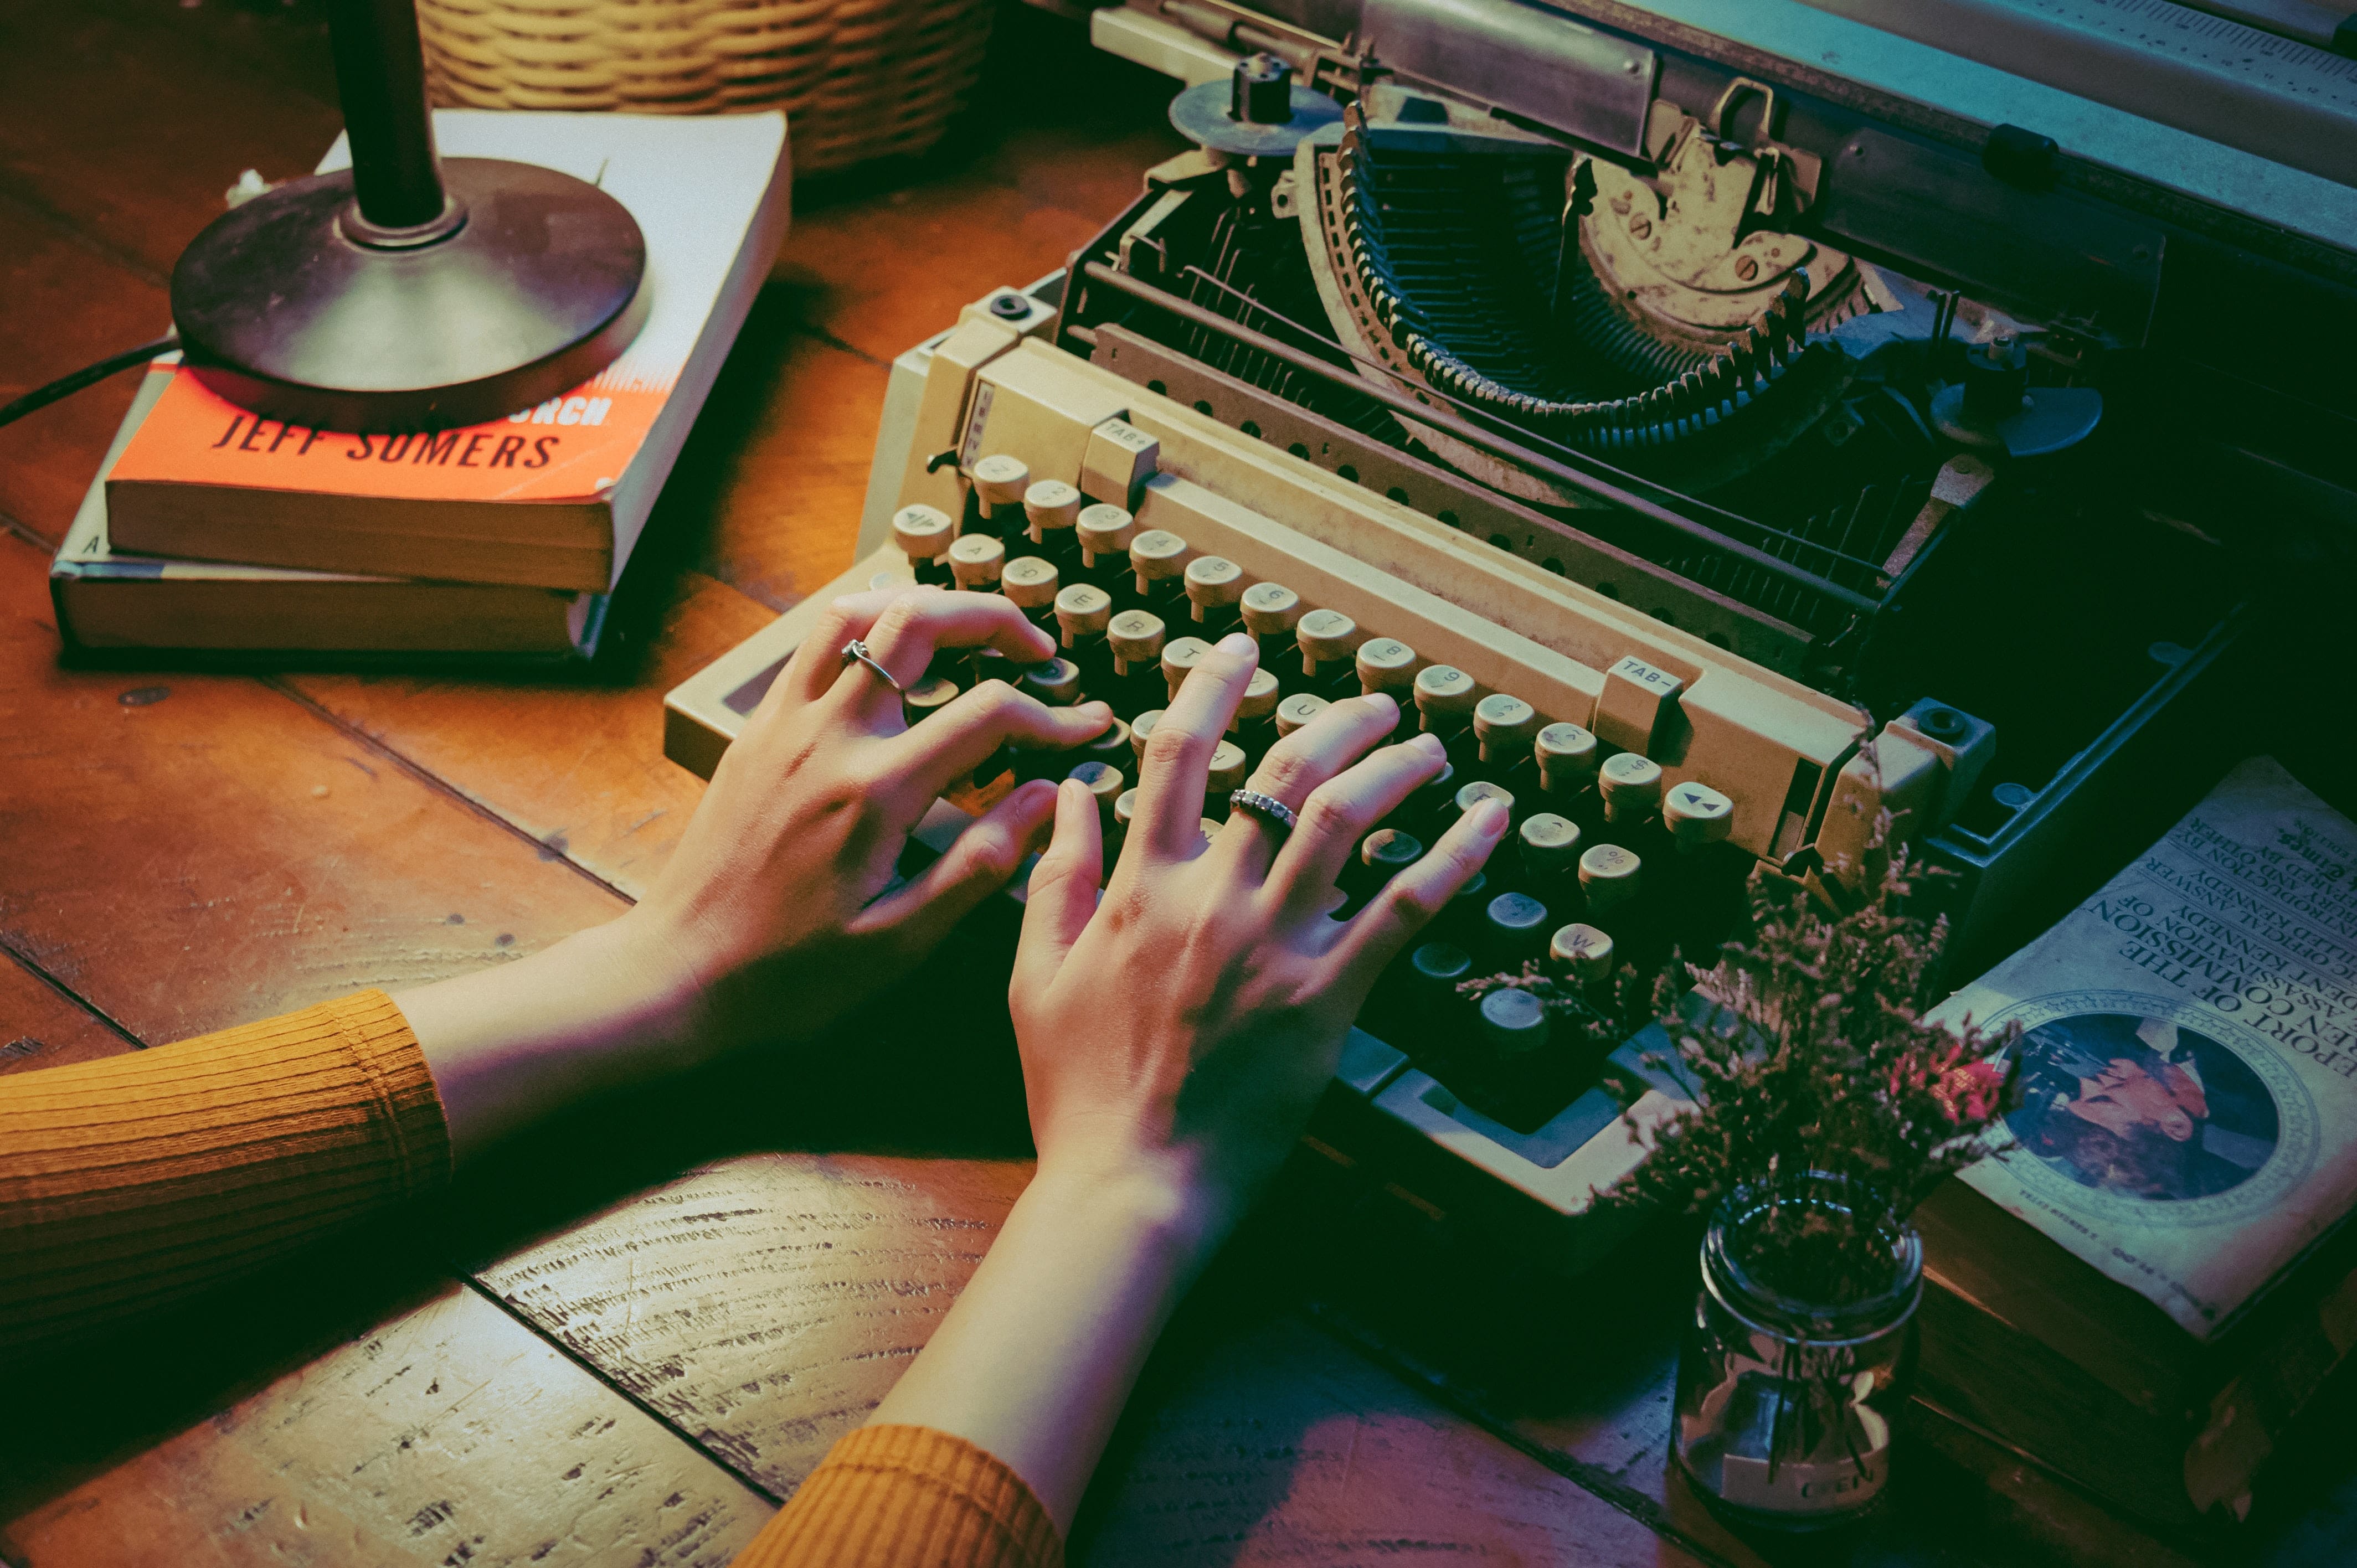 Una imagen de una máquina de escribir sobre una mesa